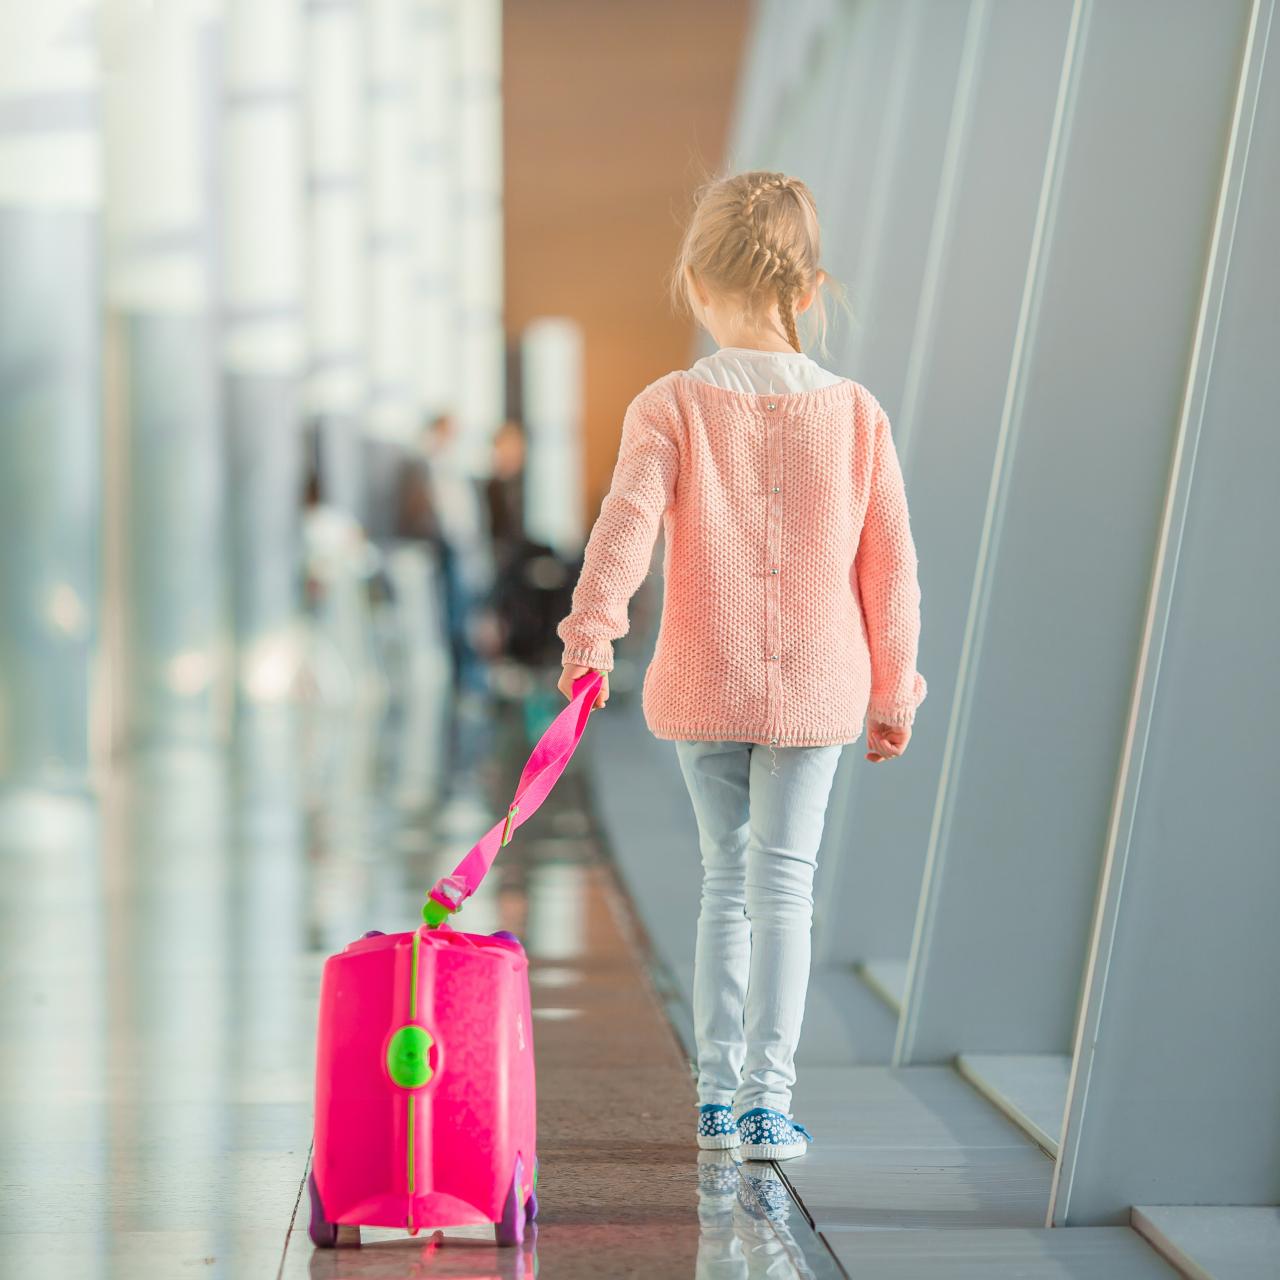 iPlay, iLerarn Kids' Vehicle Blue Carry On Travel Luggage Set